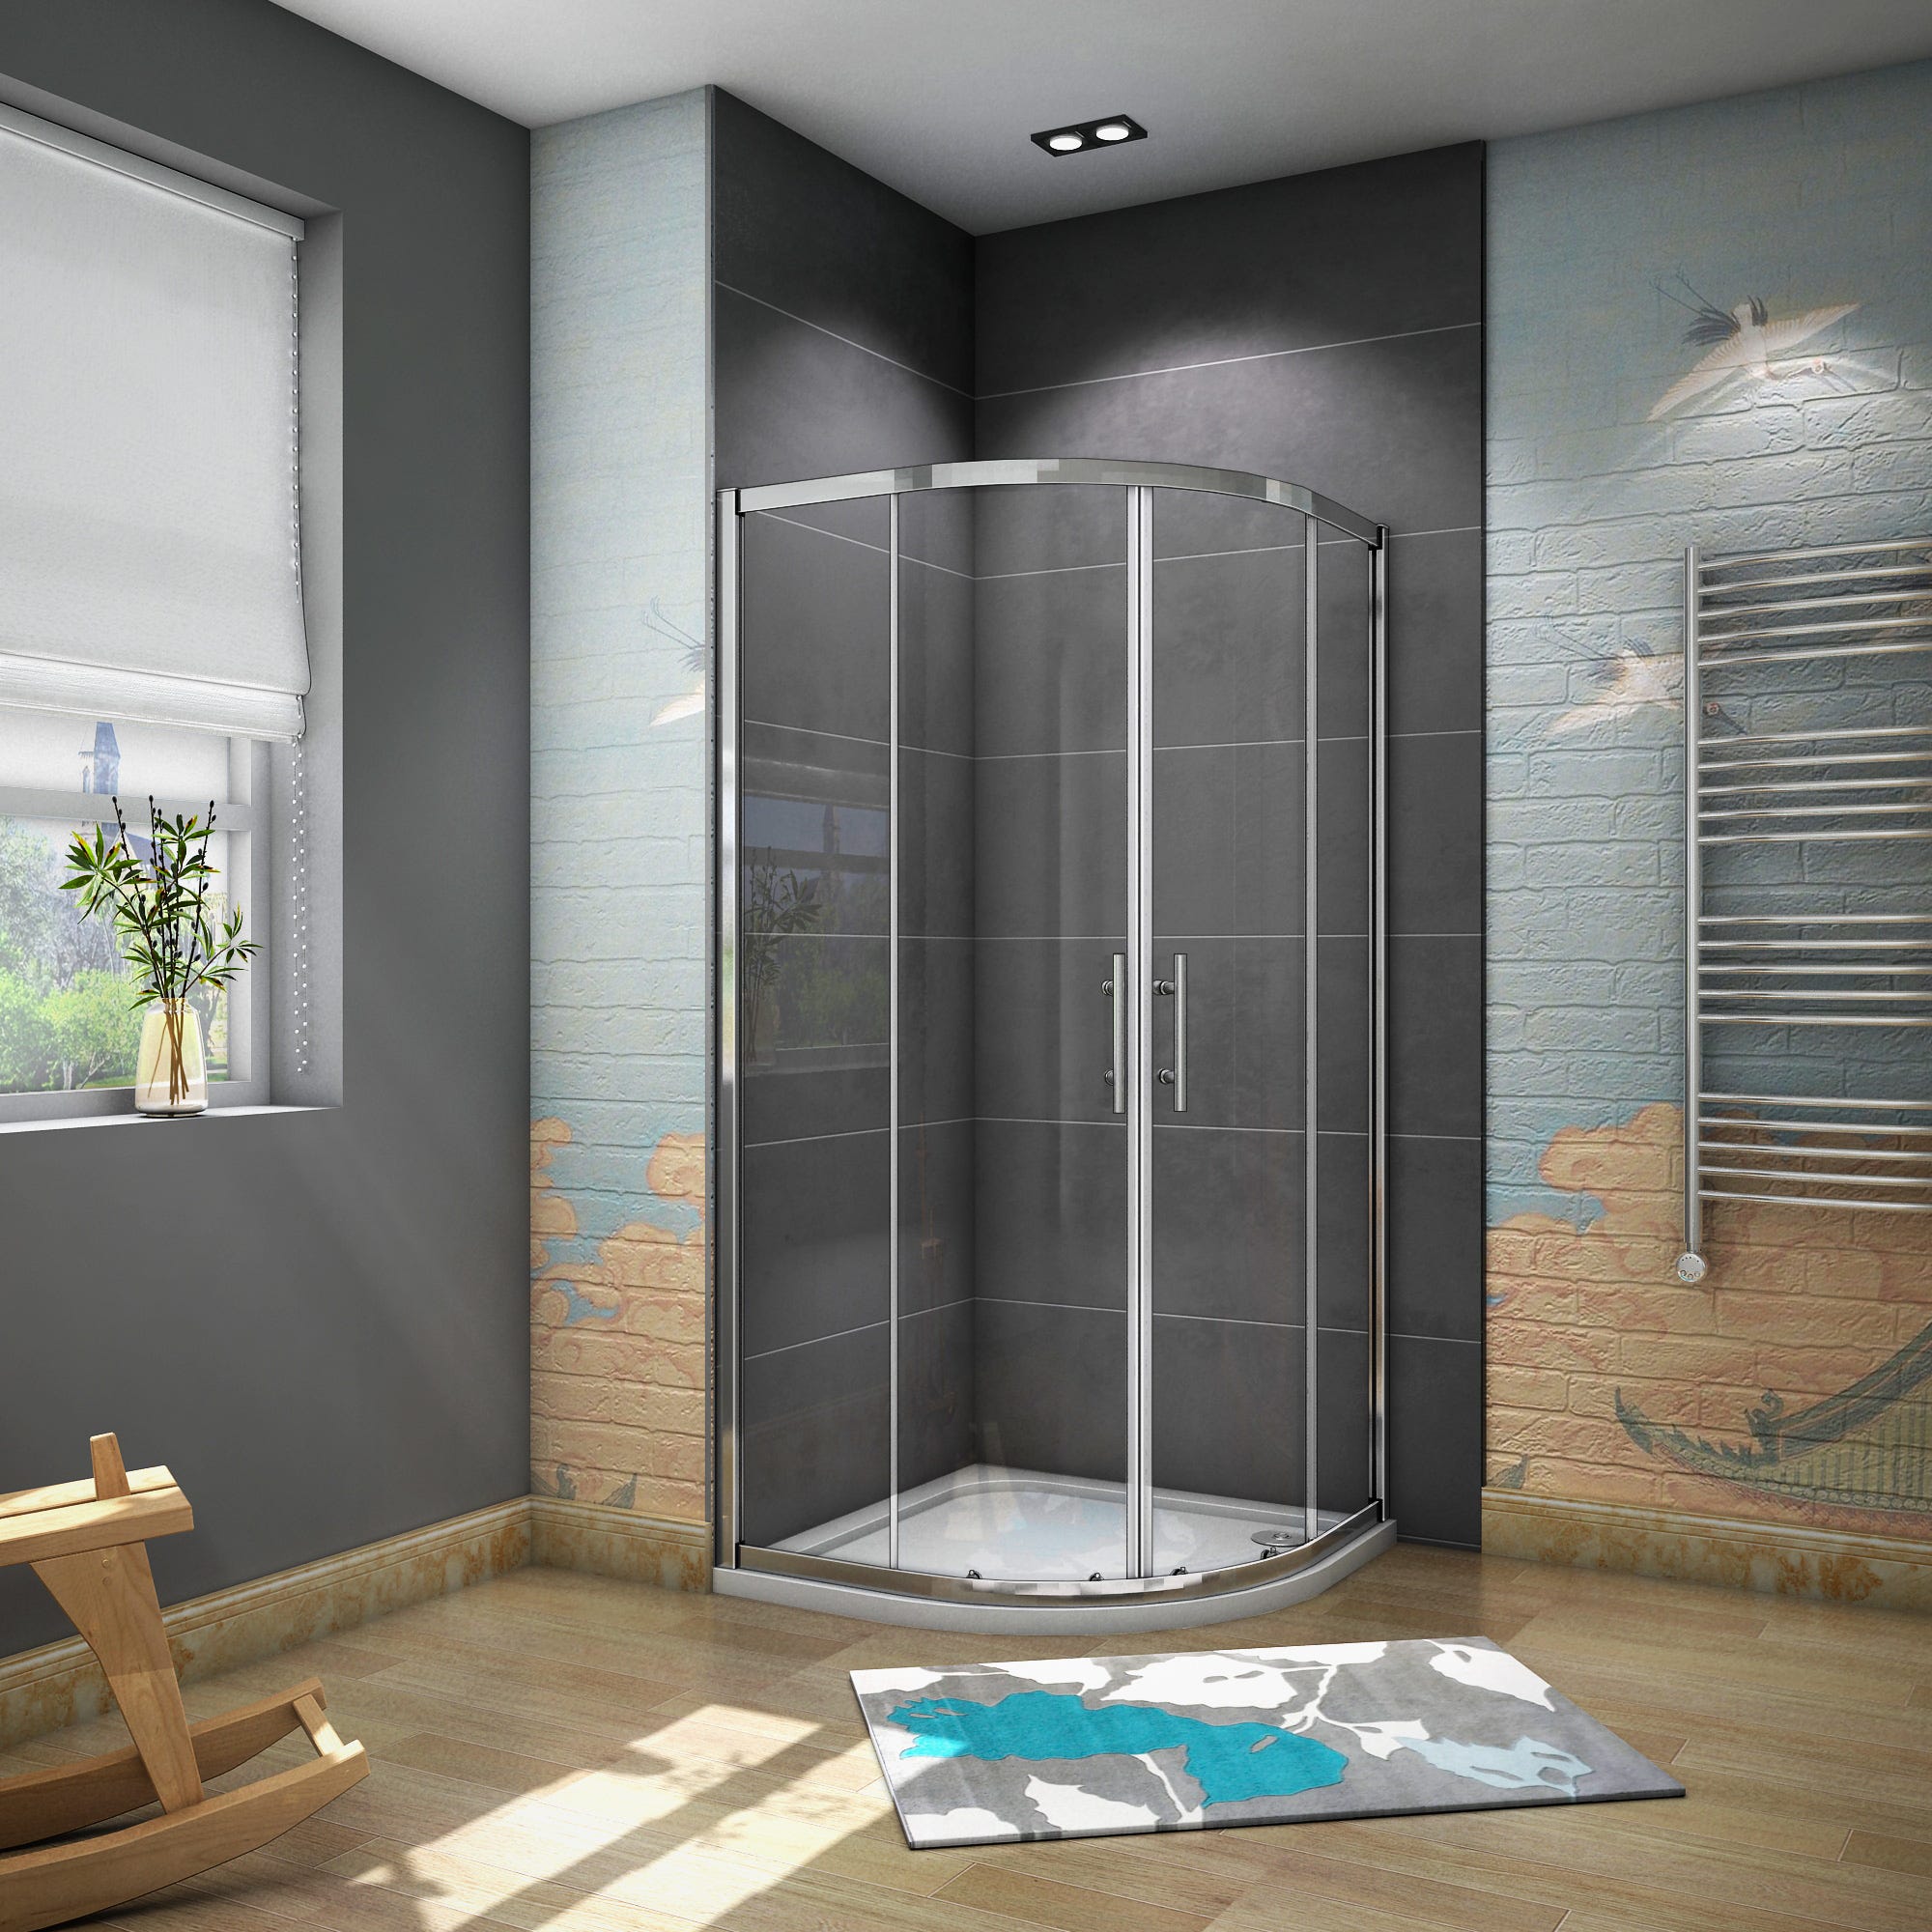 Semicircular ducha Antical modelo 300 - Mamparas de bañera y ducha